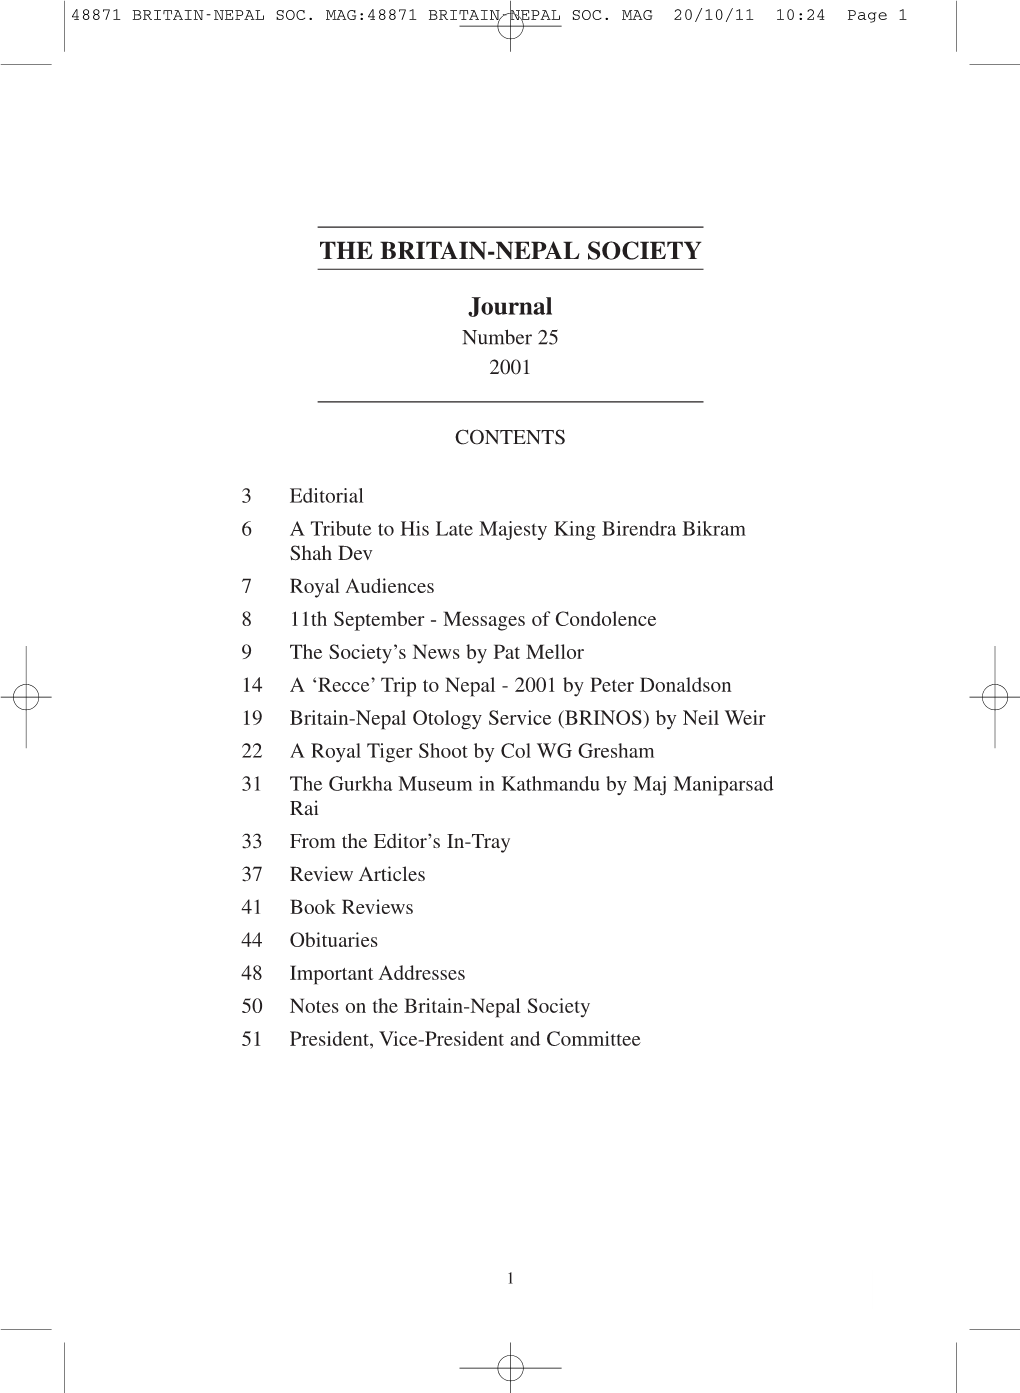 THE BRITAIN-NEPAL SOCIETY Journal